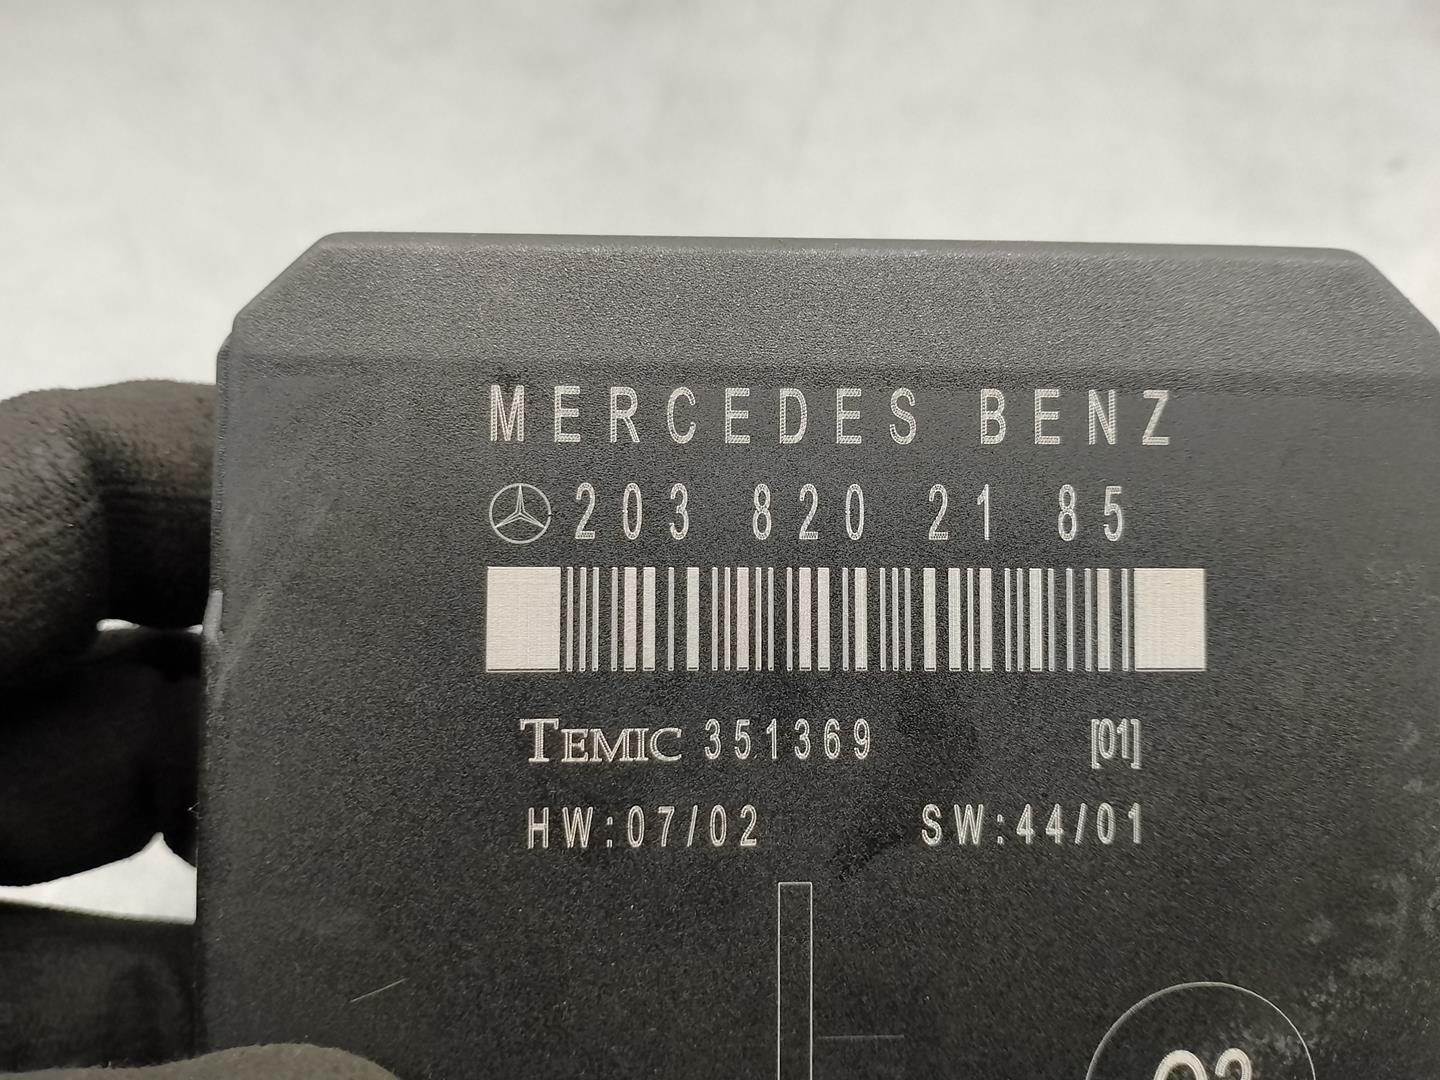 MERCEDES-BENZ C-Class W203/S203/CL203 (2000-2008) Другие блоки управления 2038202185, 351369, TEMIC 24179162